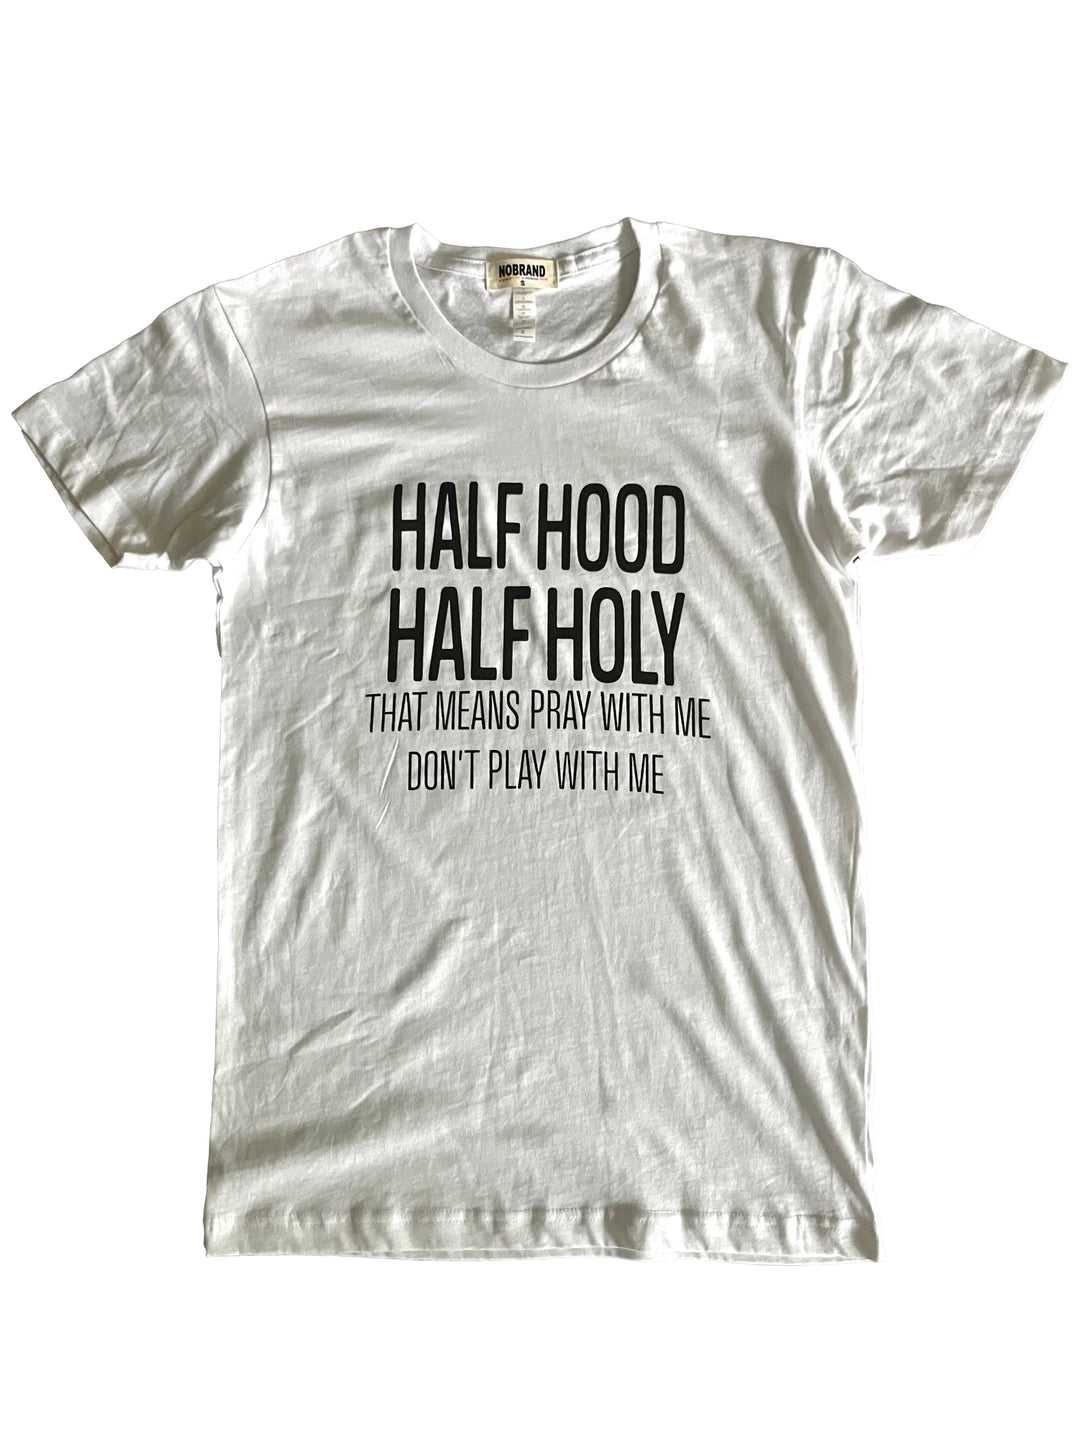 a white t - shirt that says half hood half holy